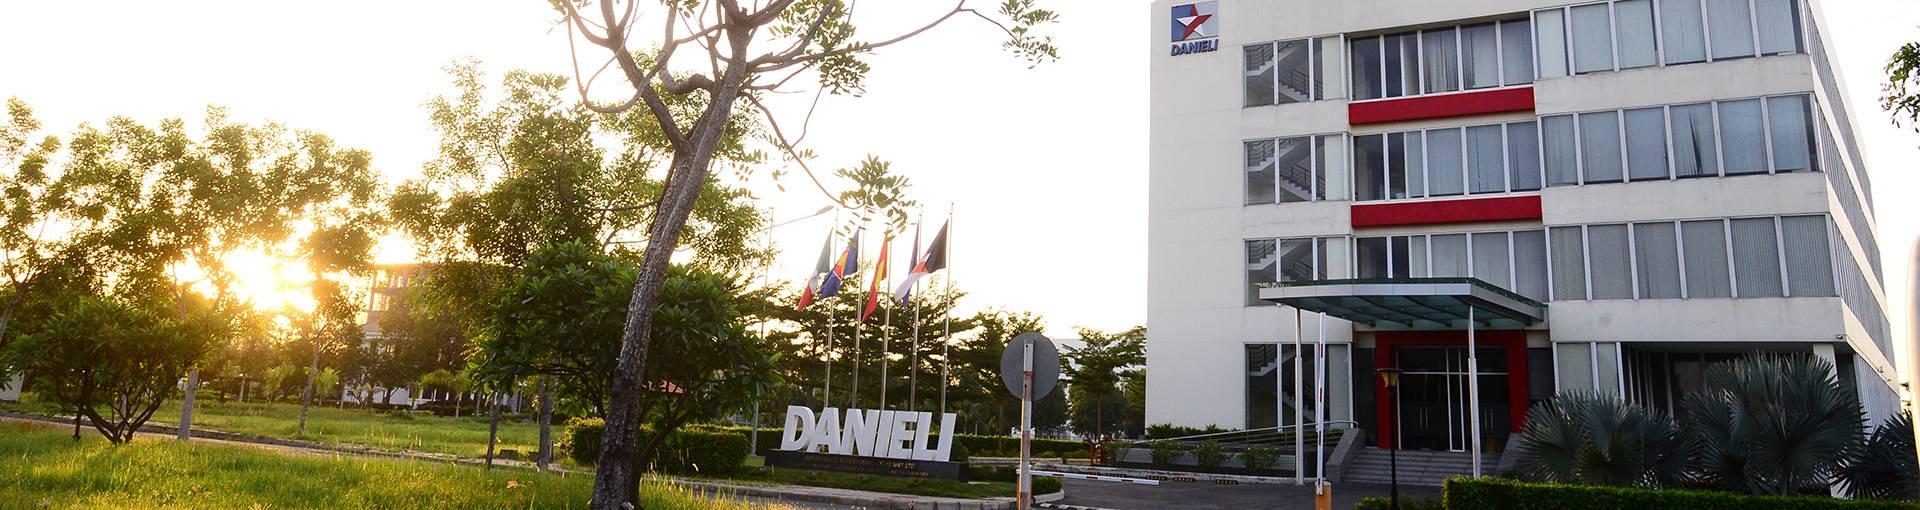 Danieli – Industrielle Beteiligung Co., Ltd